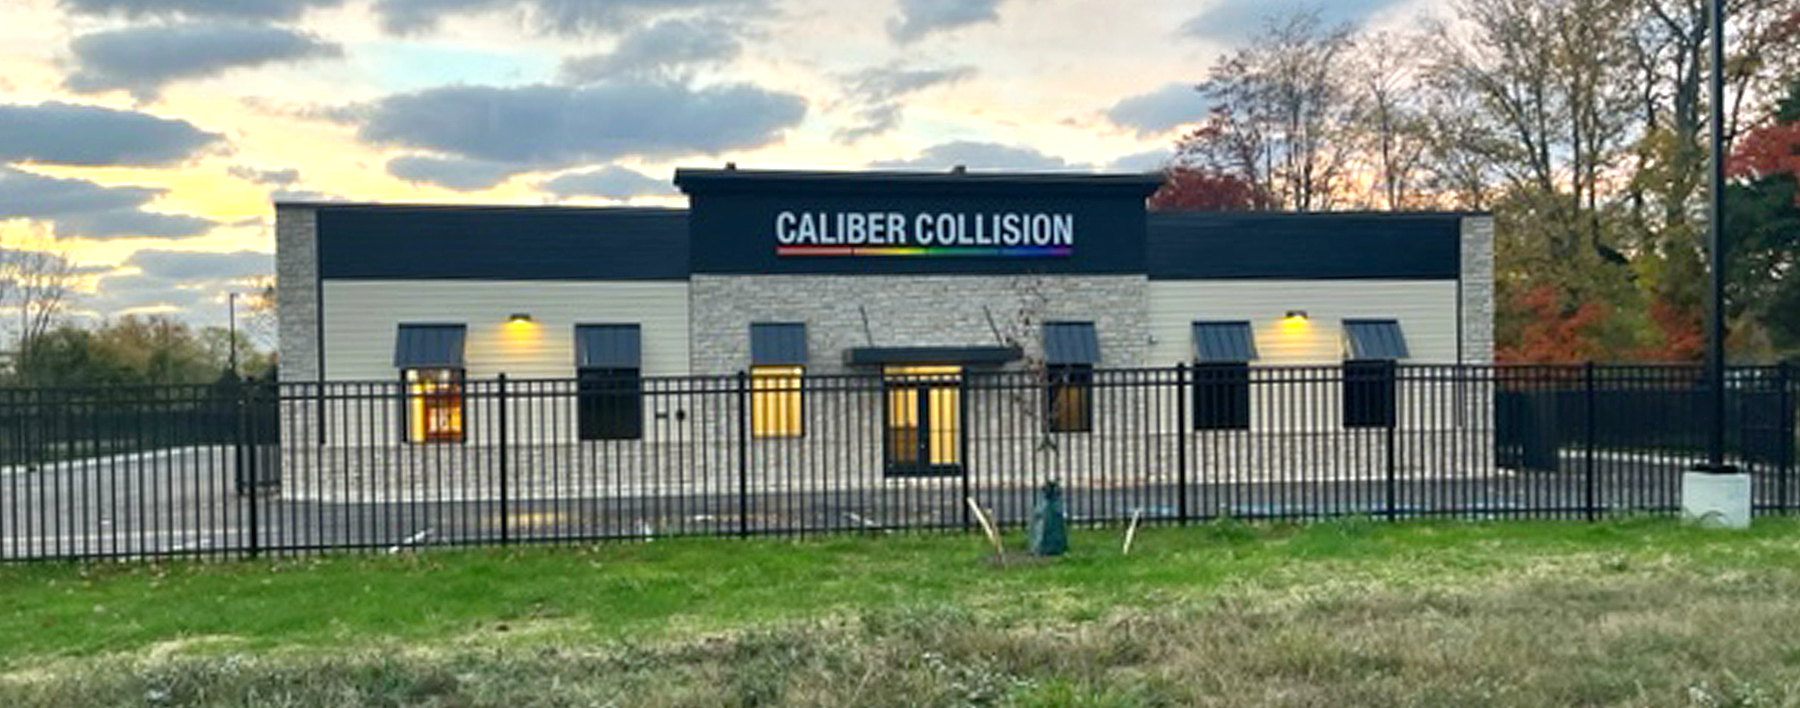 Caliber Collision - Mt Washington, KY | GLR, Inc.